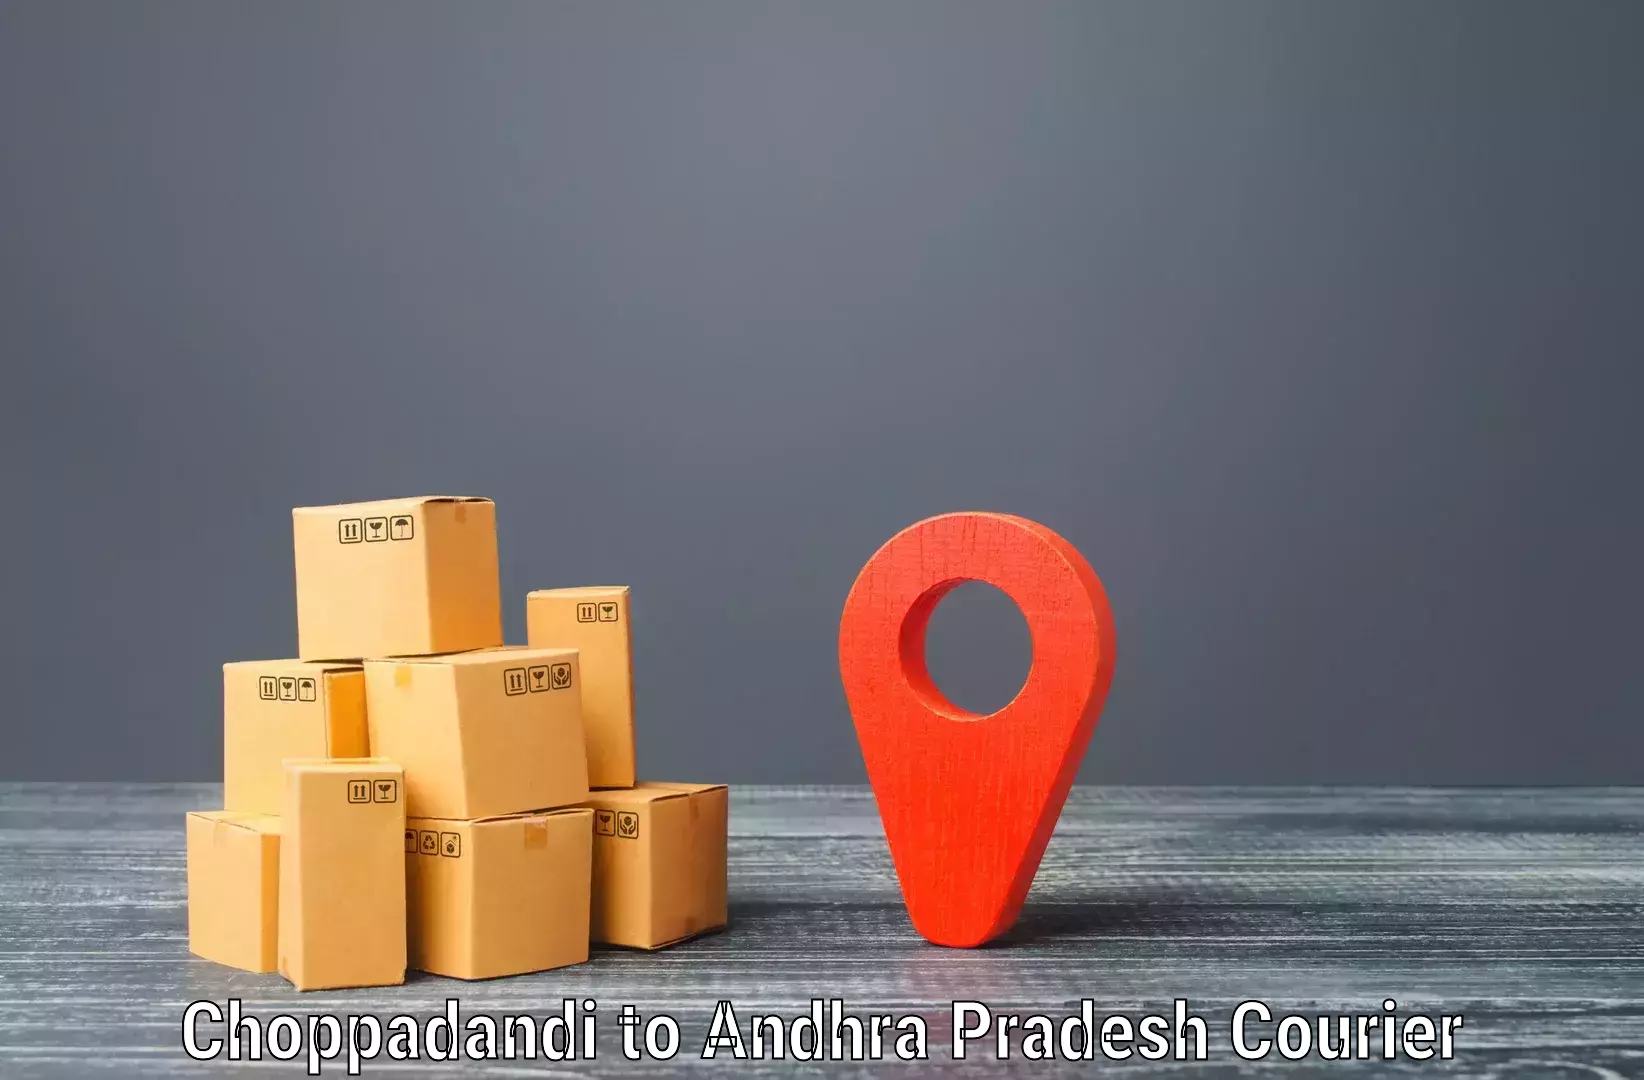 Remote area delivery in Choppadandi to Bhimavaram